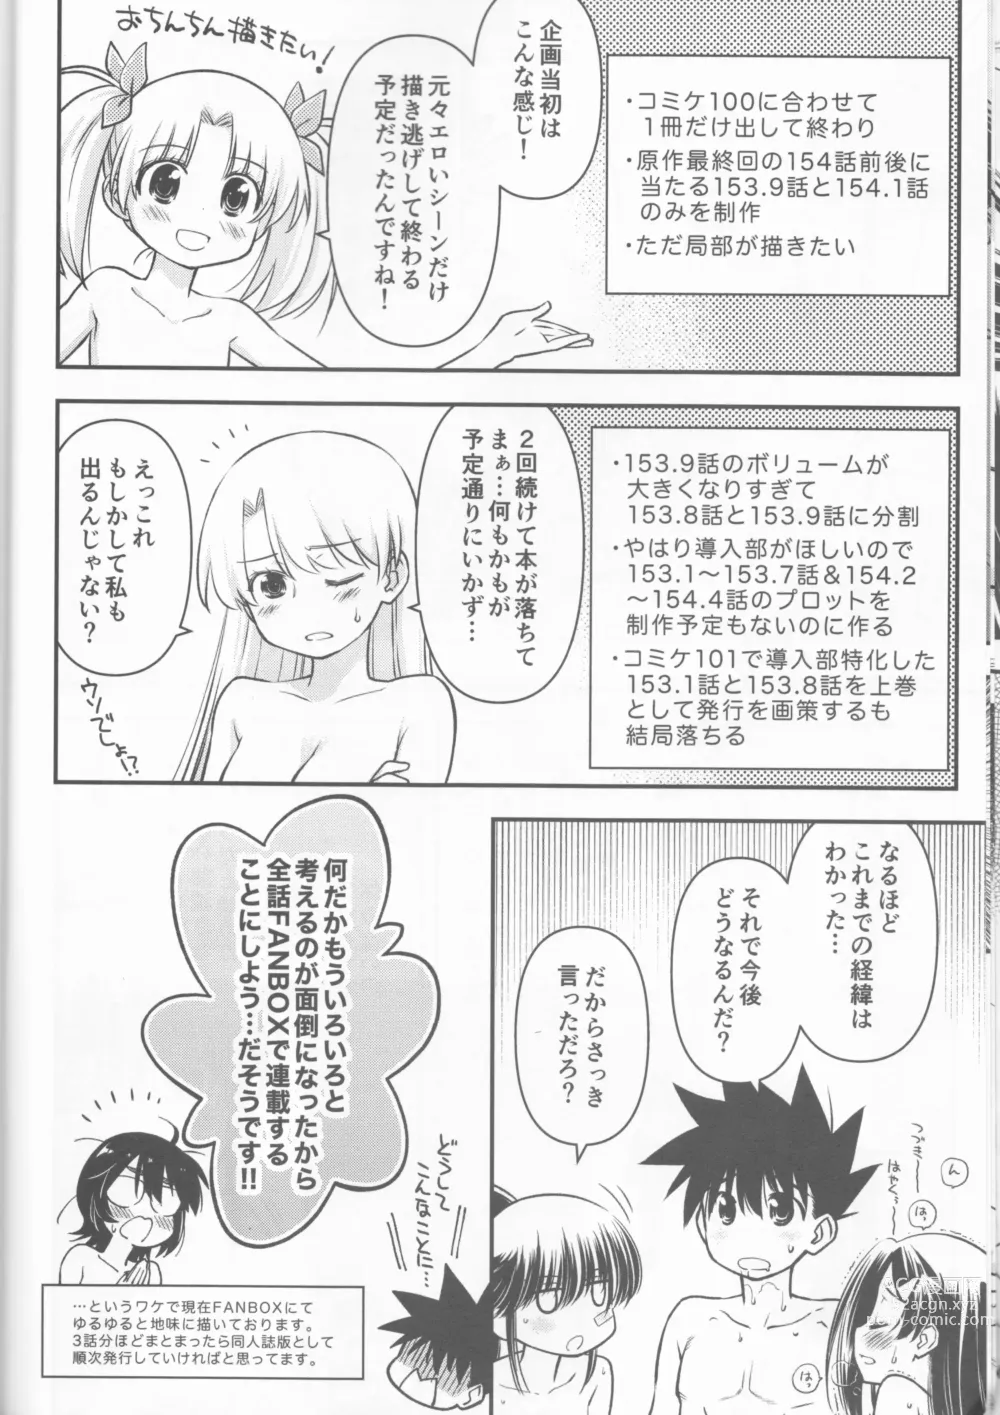 Page 15 of doujinshi kxs.